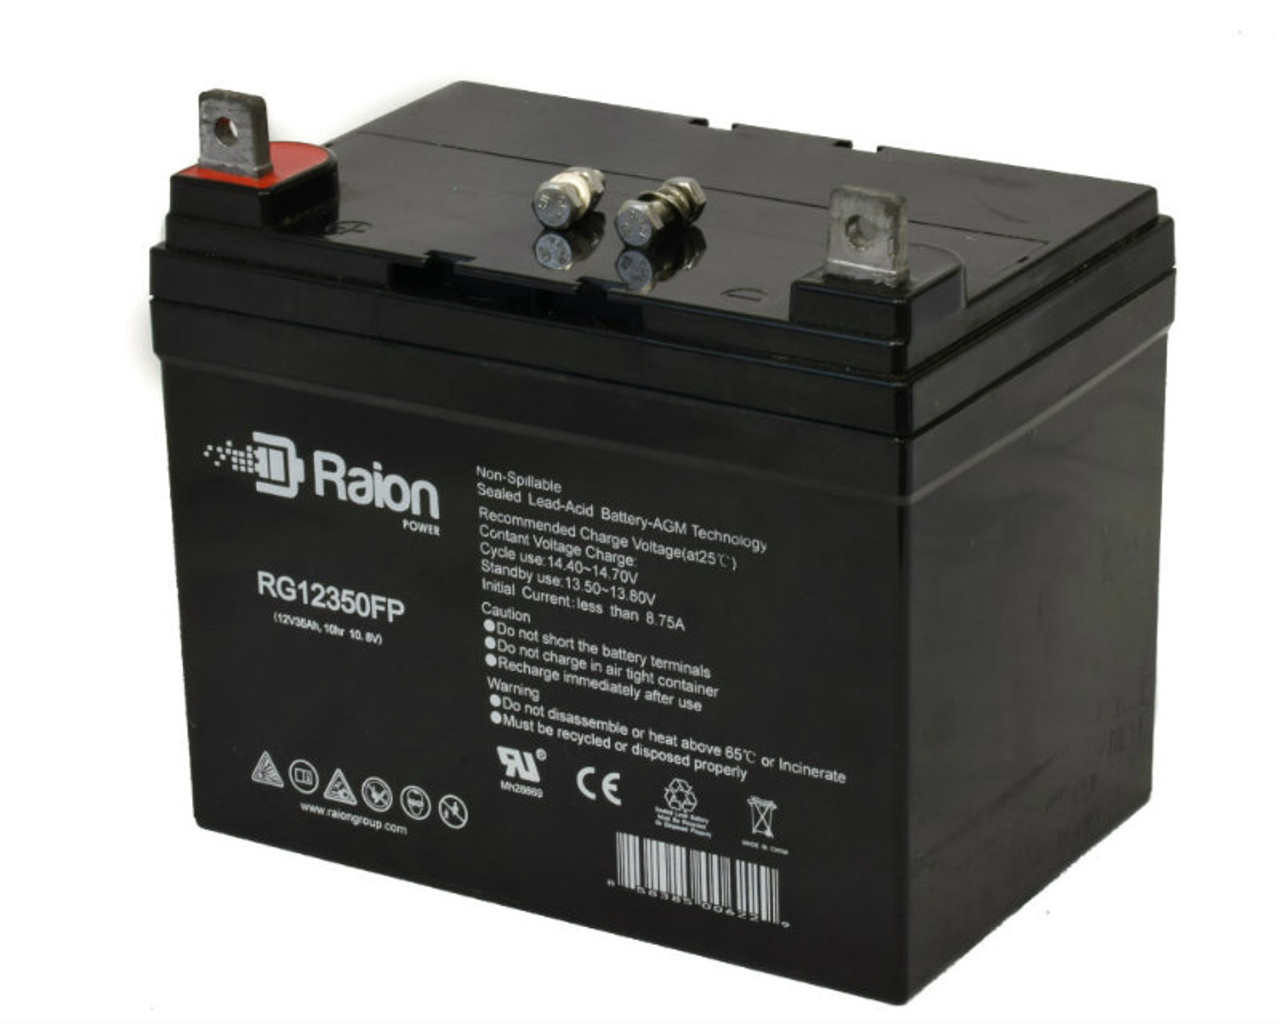 Raion Power Replacement 12V 35Ah RG12350FP Battery for Vision CG12-33XA